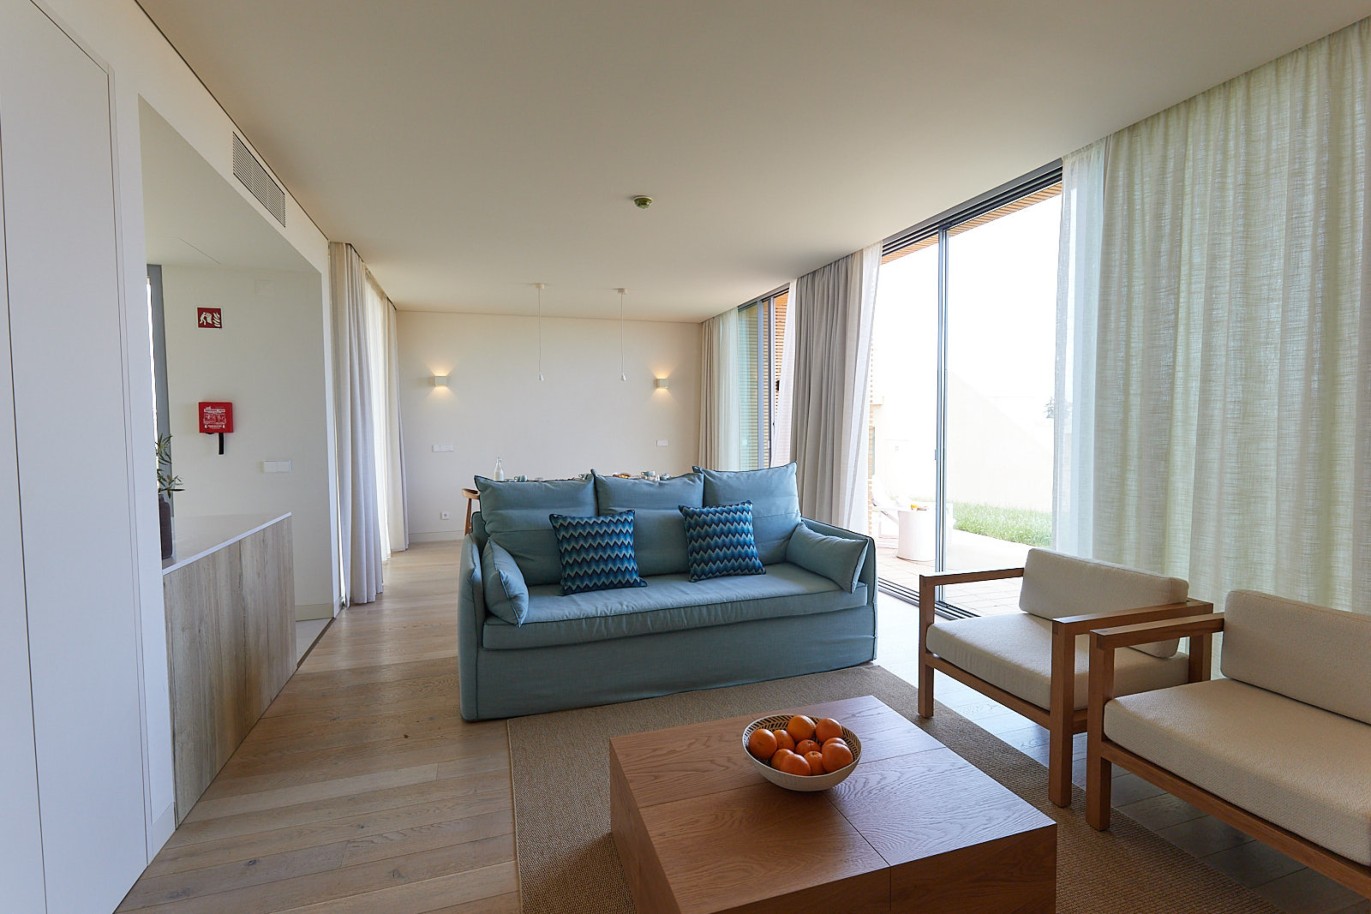 2 bedroom apartment in resort, for sale in Porches, Algarve_230555